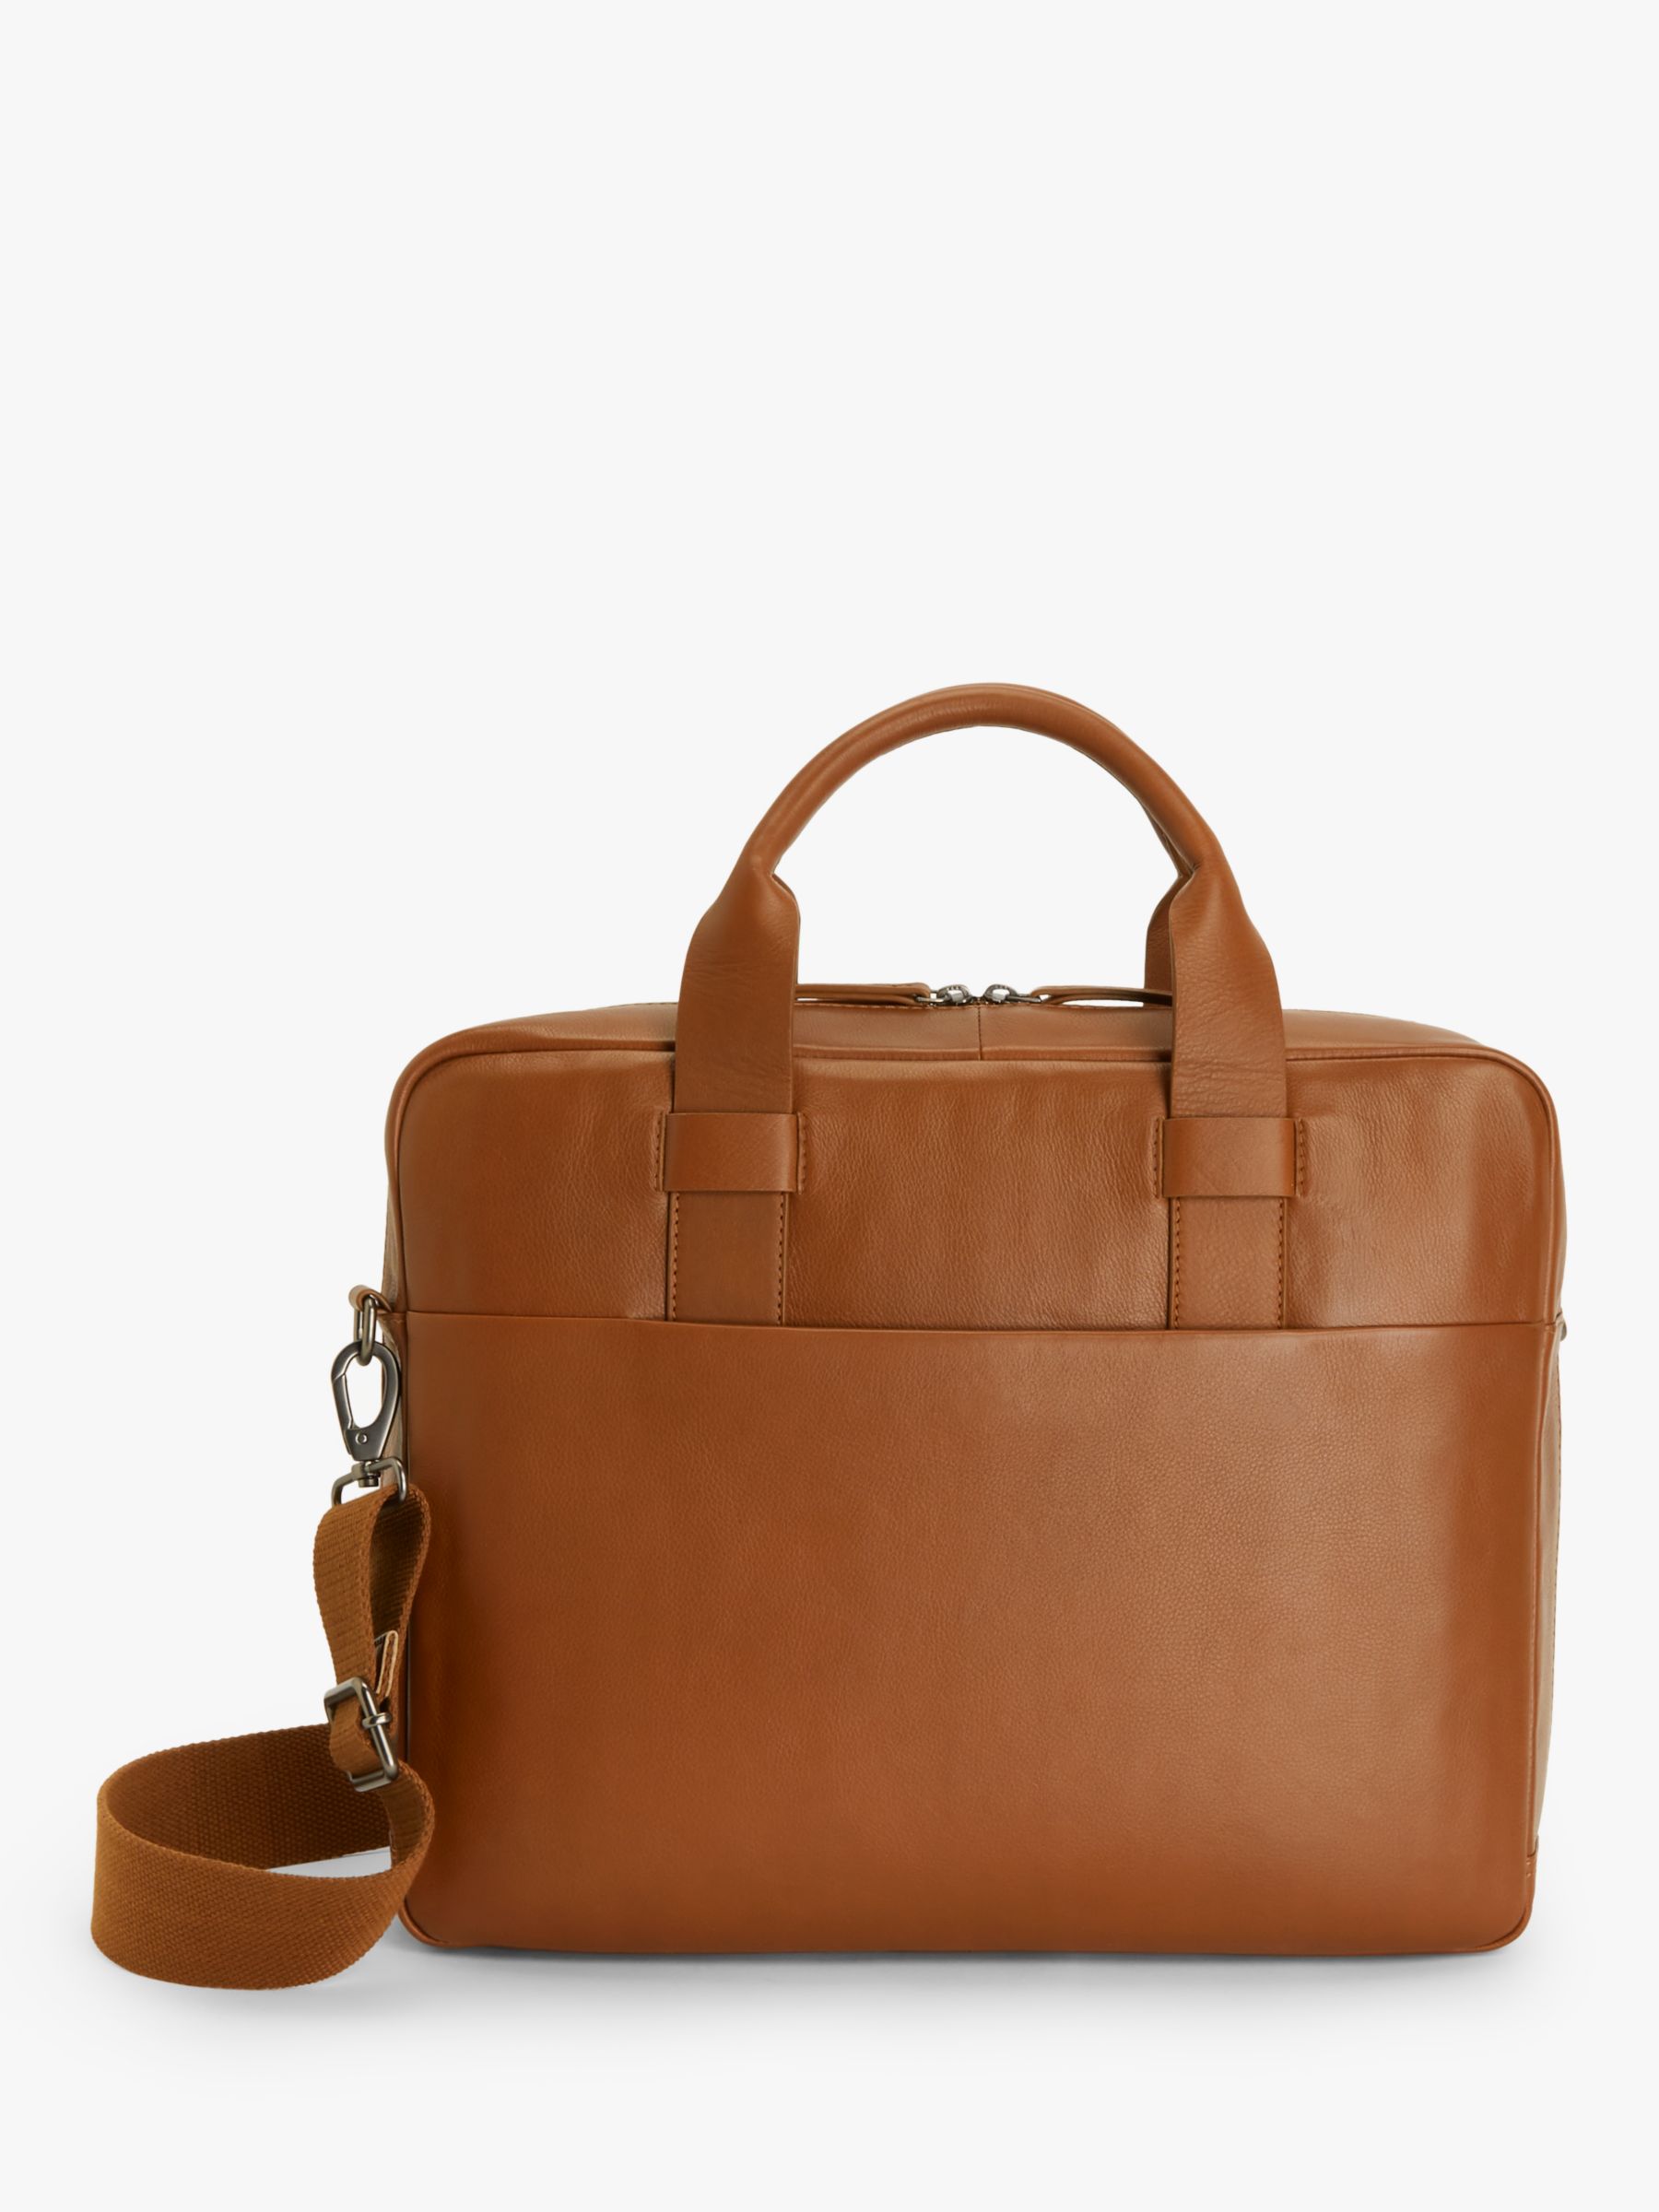 LOUIS VUITTON Authentic Paper Gift Shopping Bag Tote Orange 8.5 X 7 X 4.5”